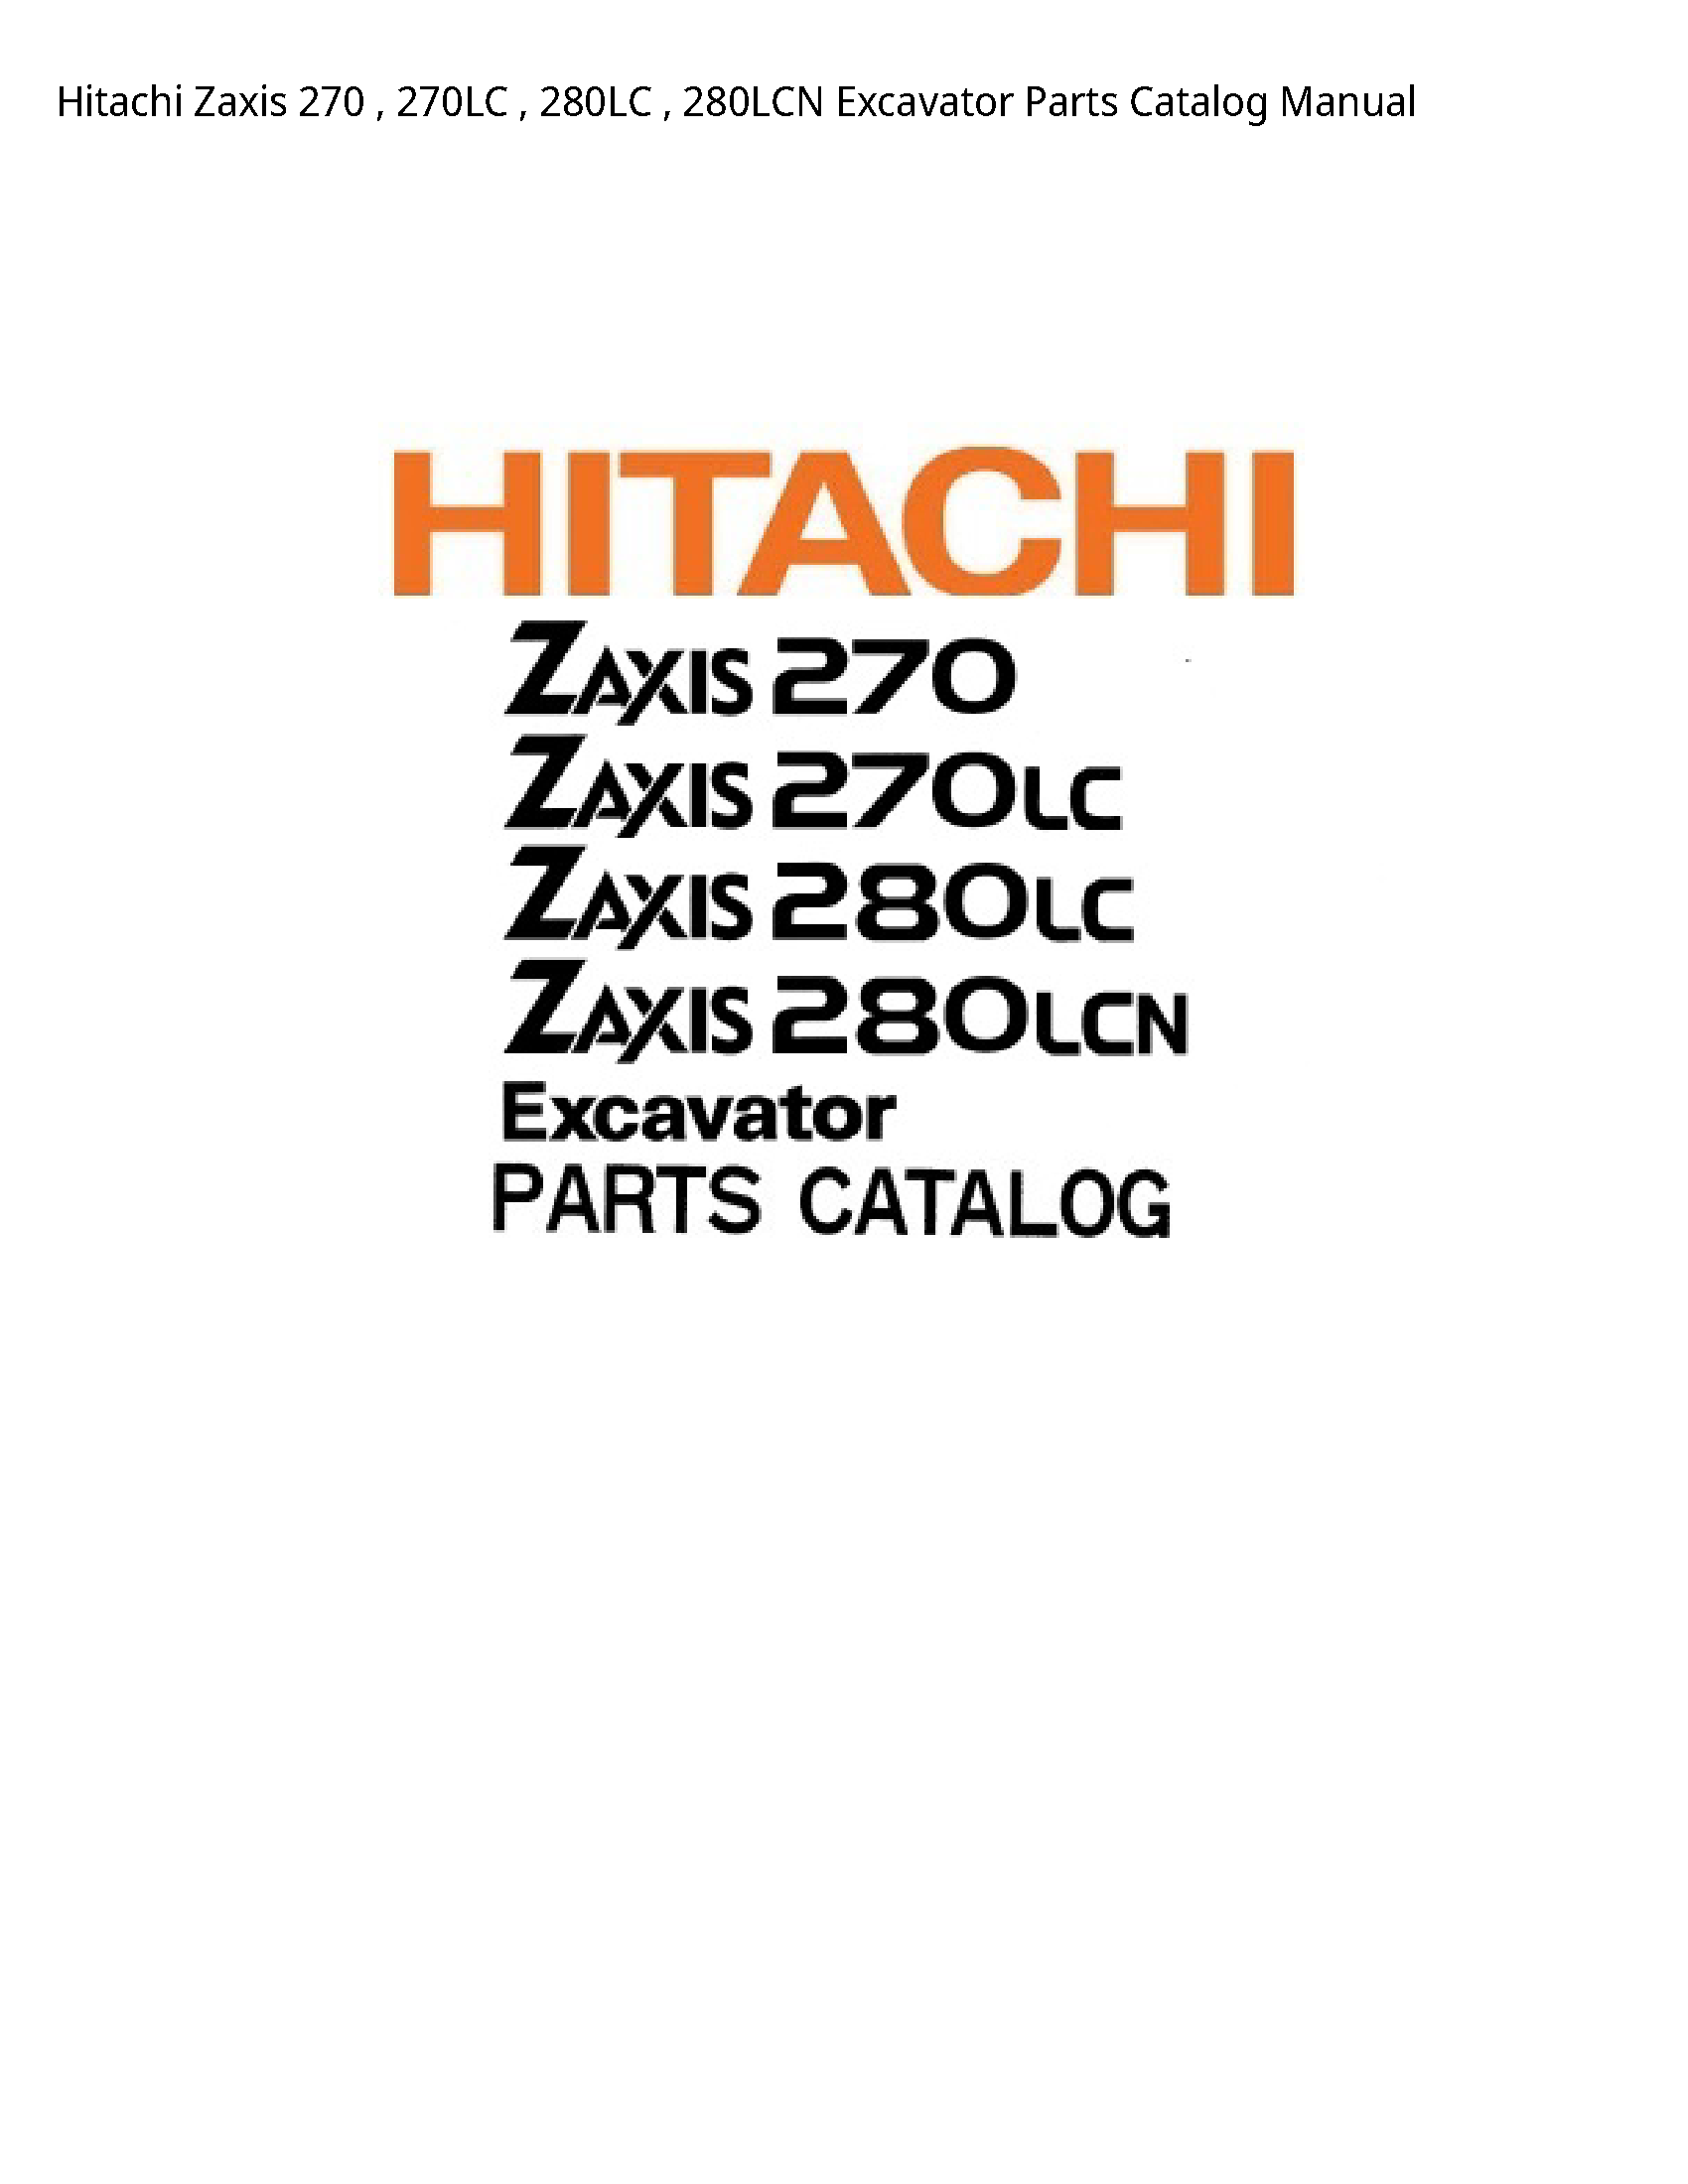 Hitachi 270 Zaxis Excavator Parts Catalog manual